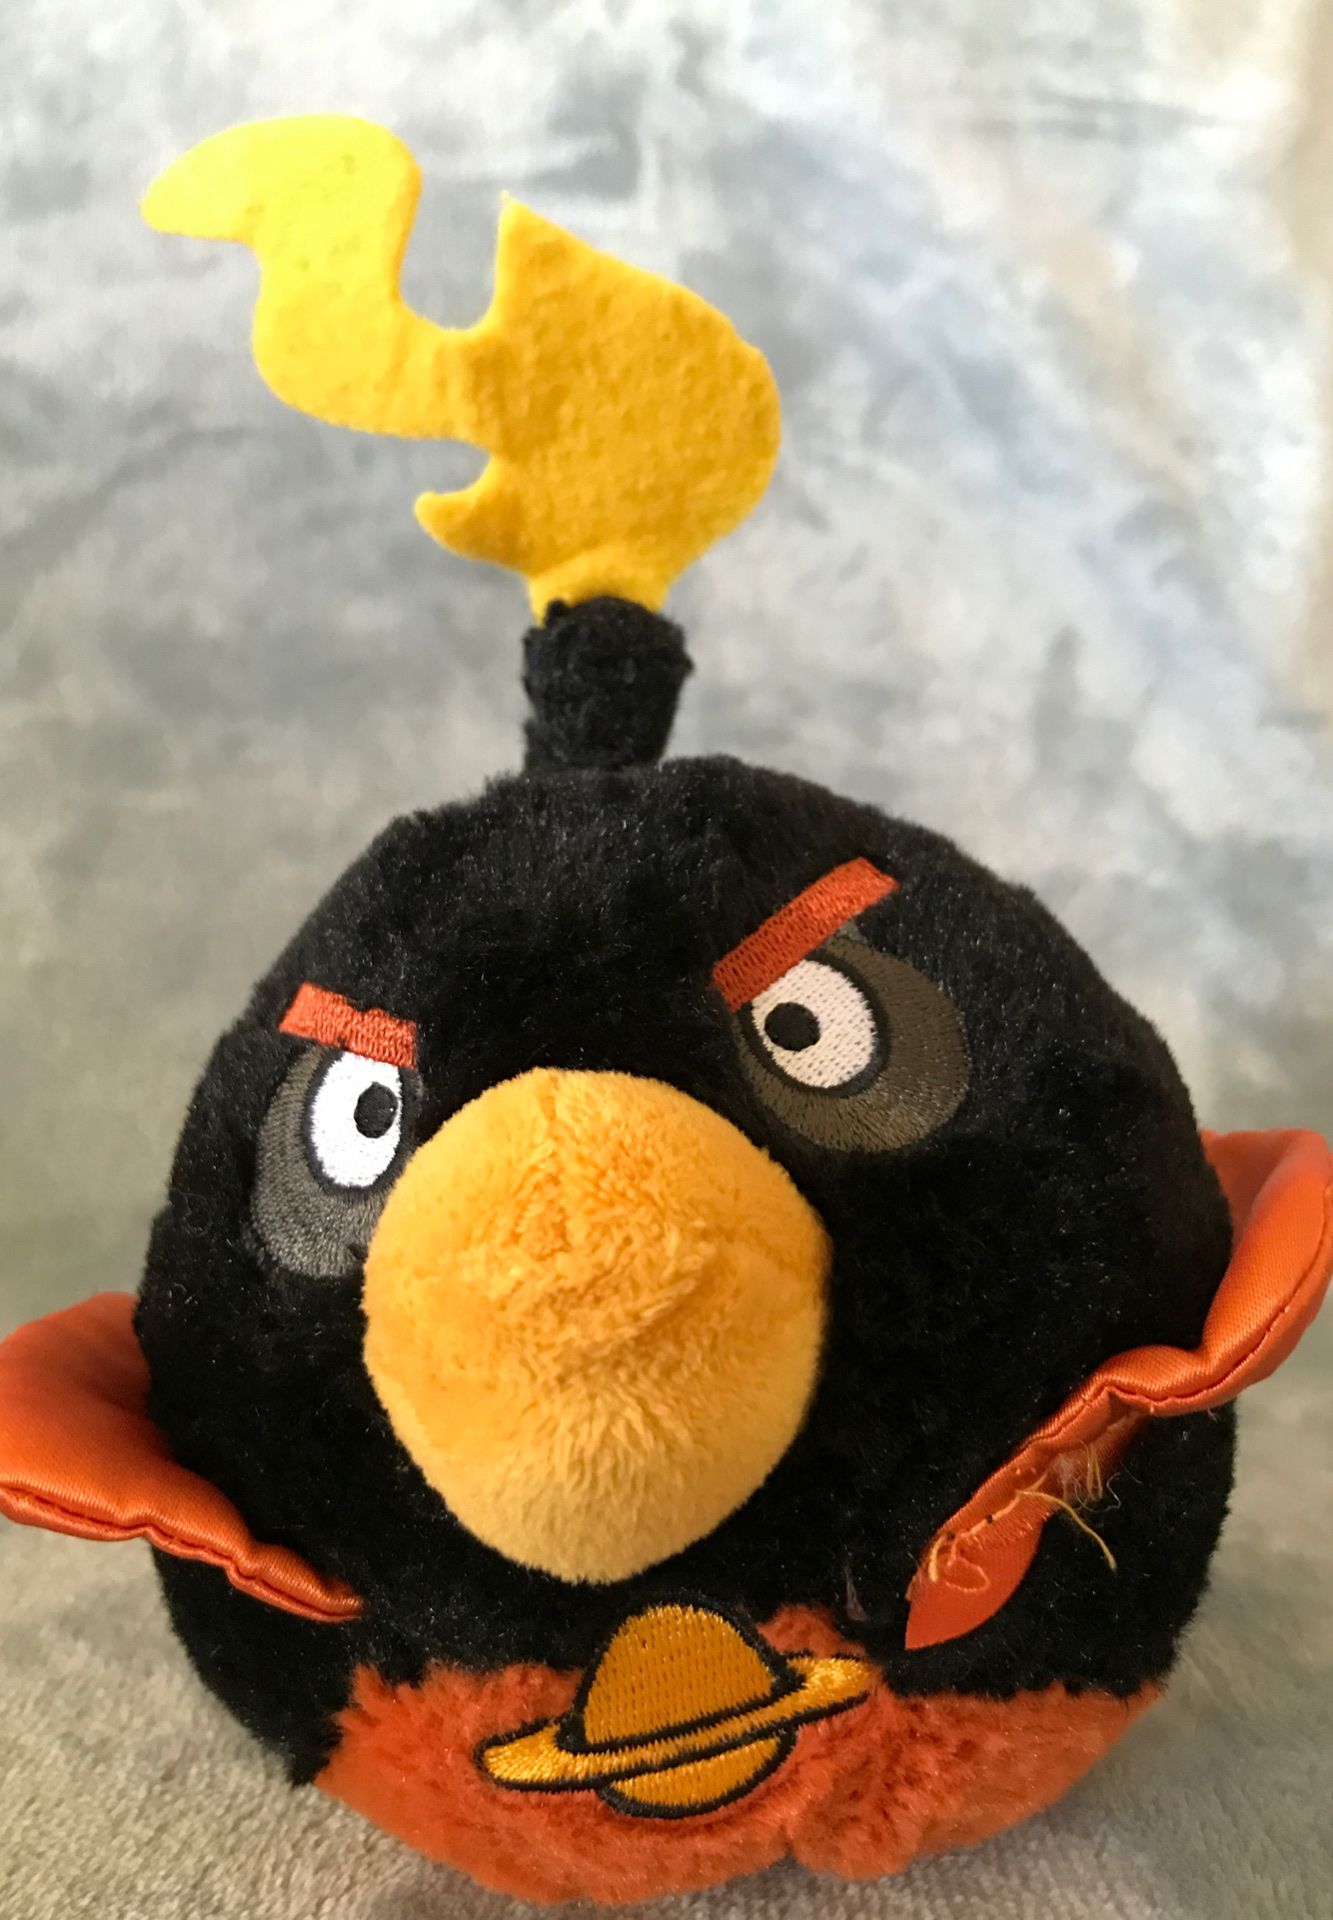 5” angry Birds stuffed animal